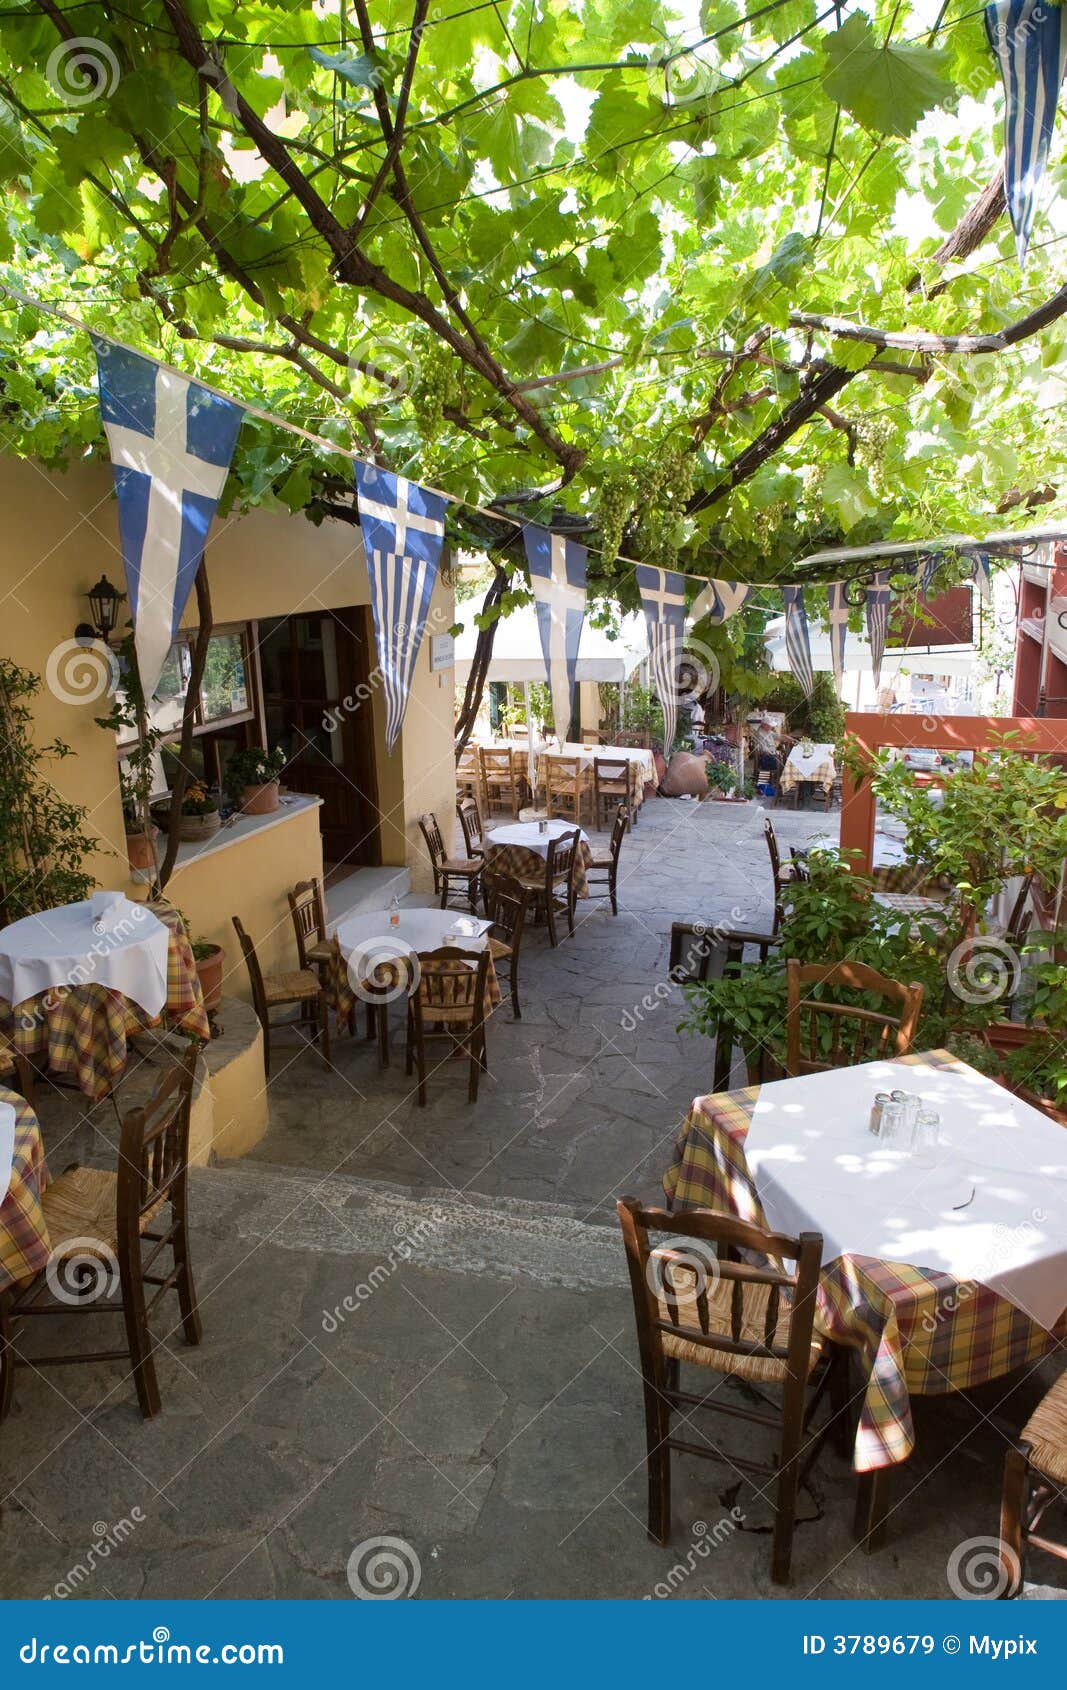 picturesque restaurant in athens